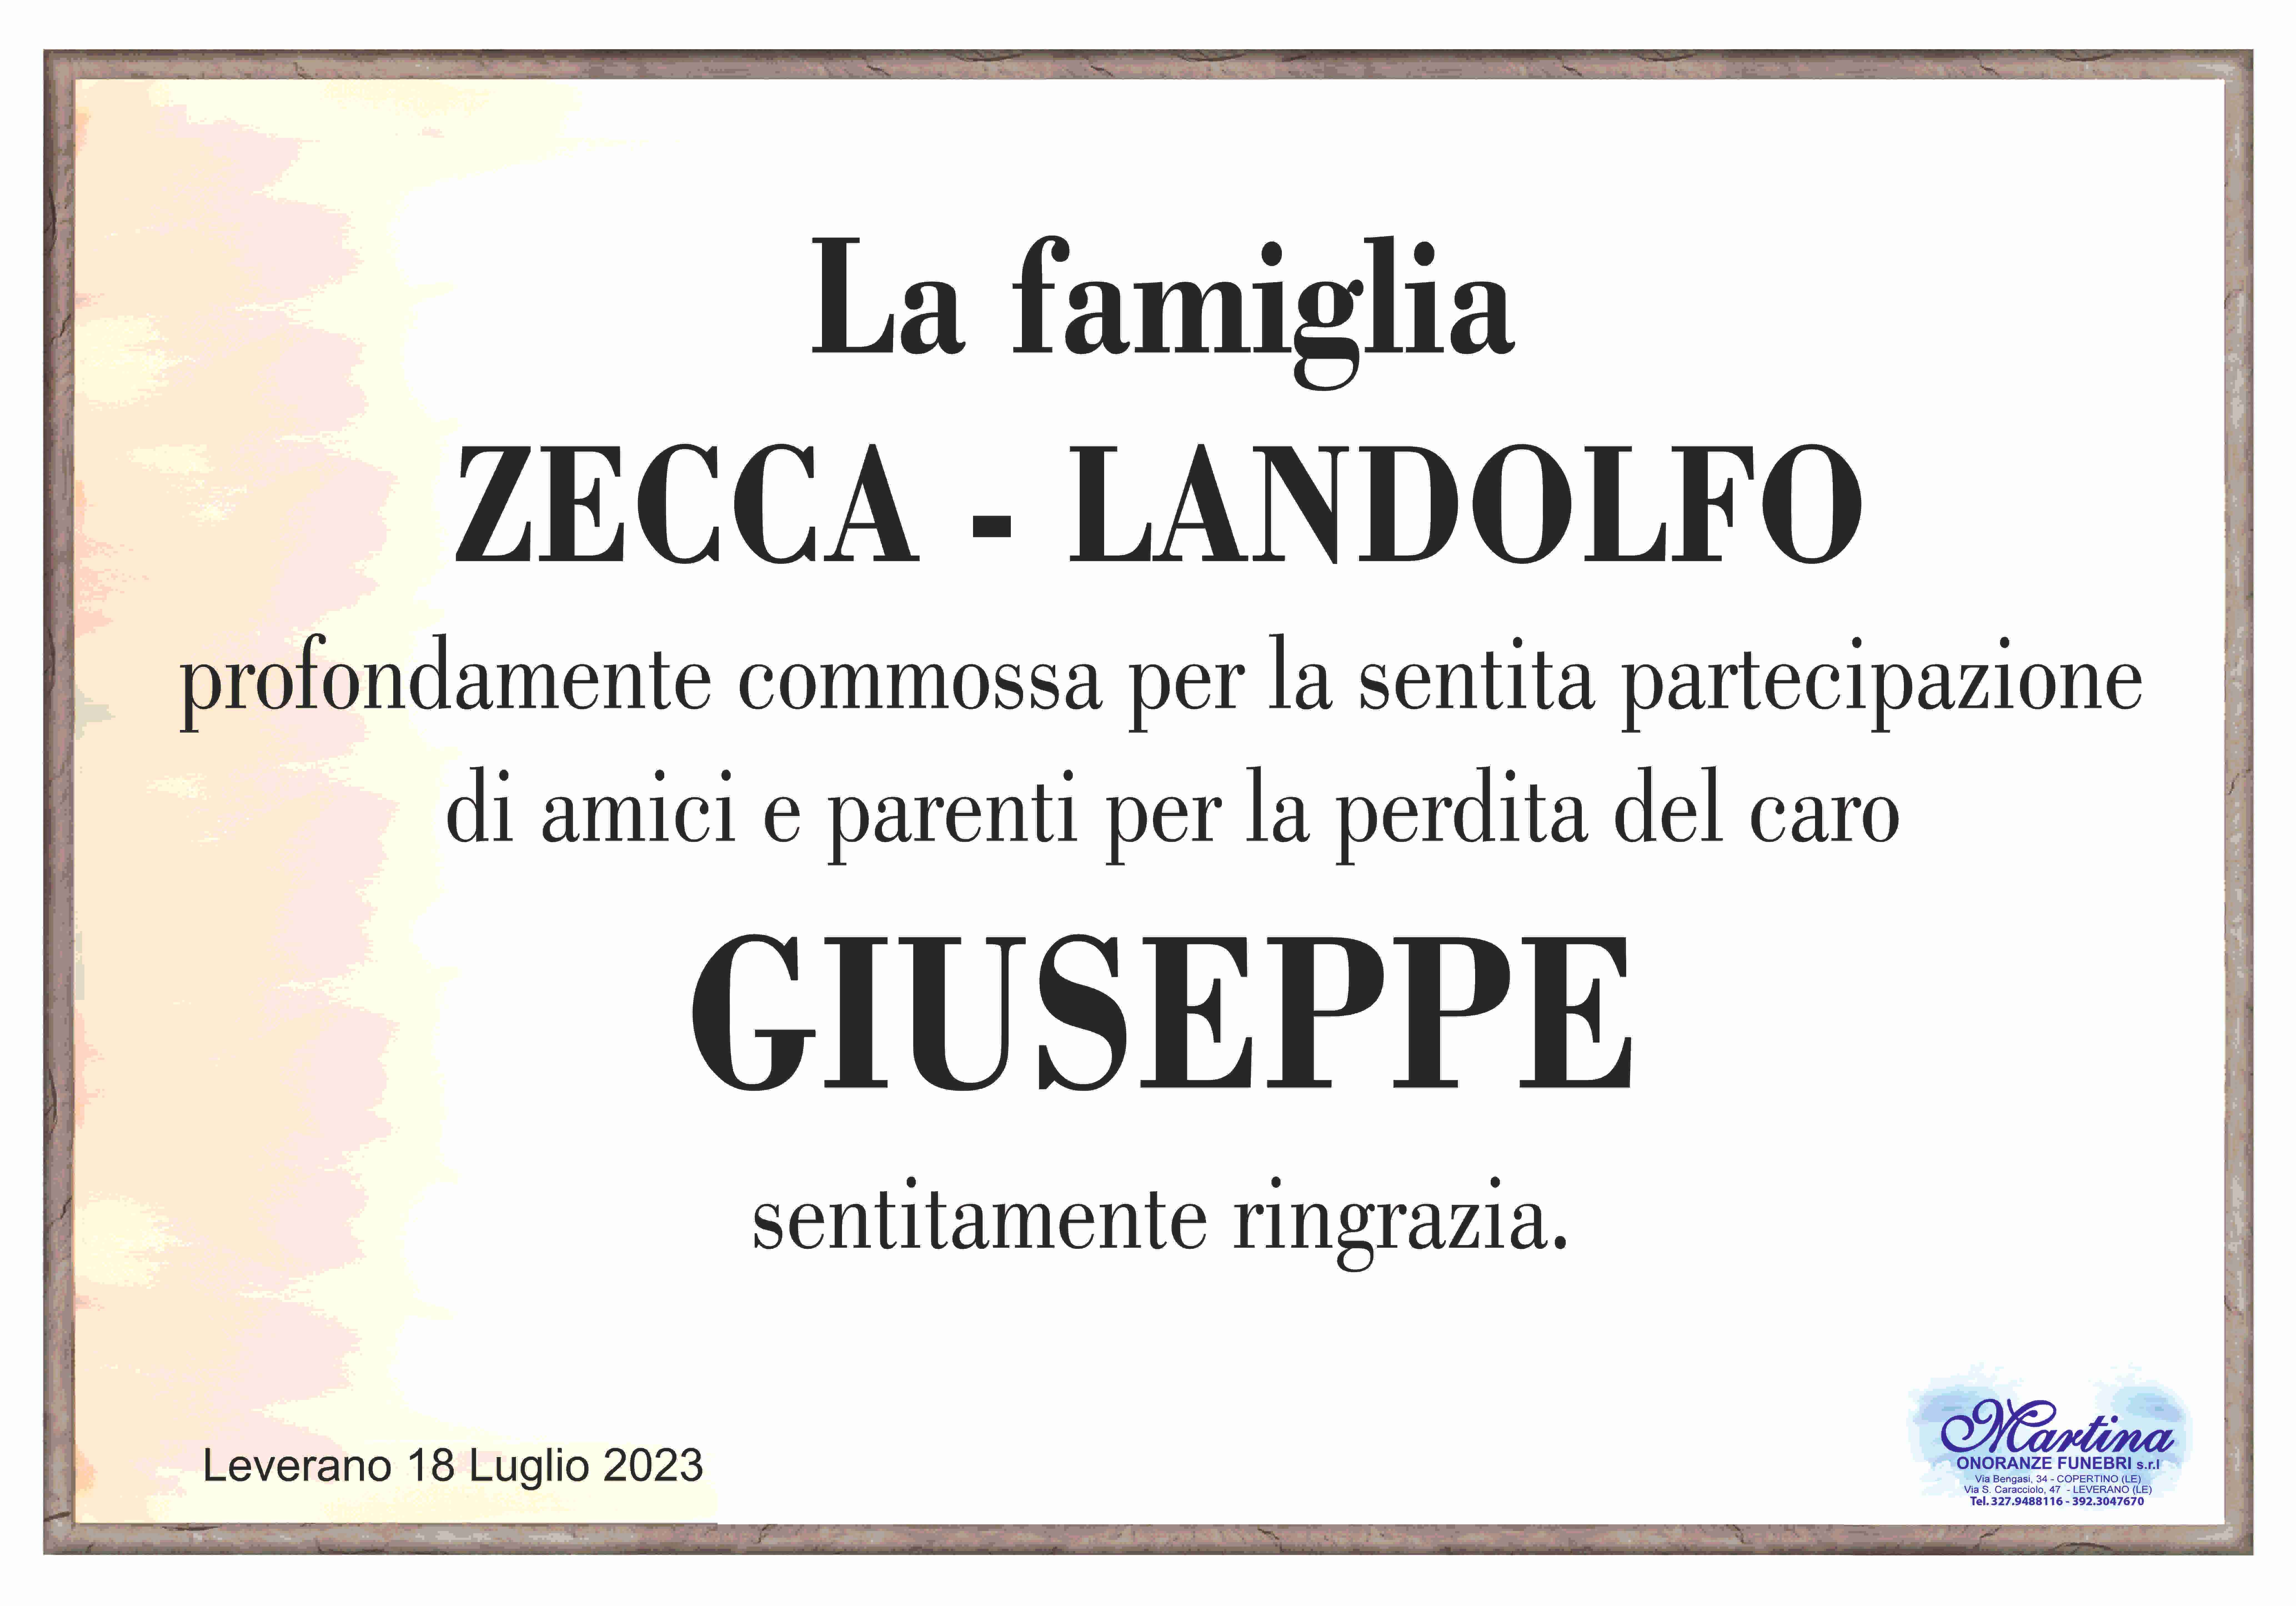 Giuseppe Zecca